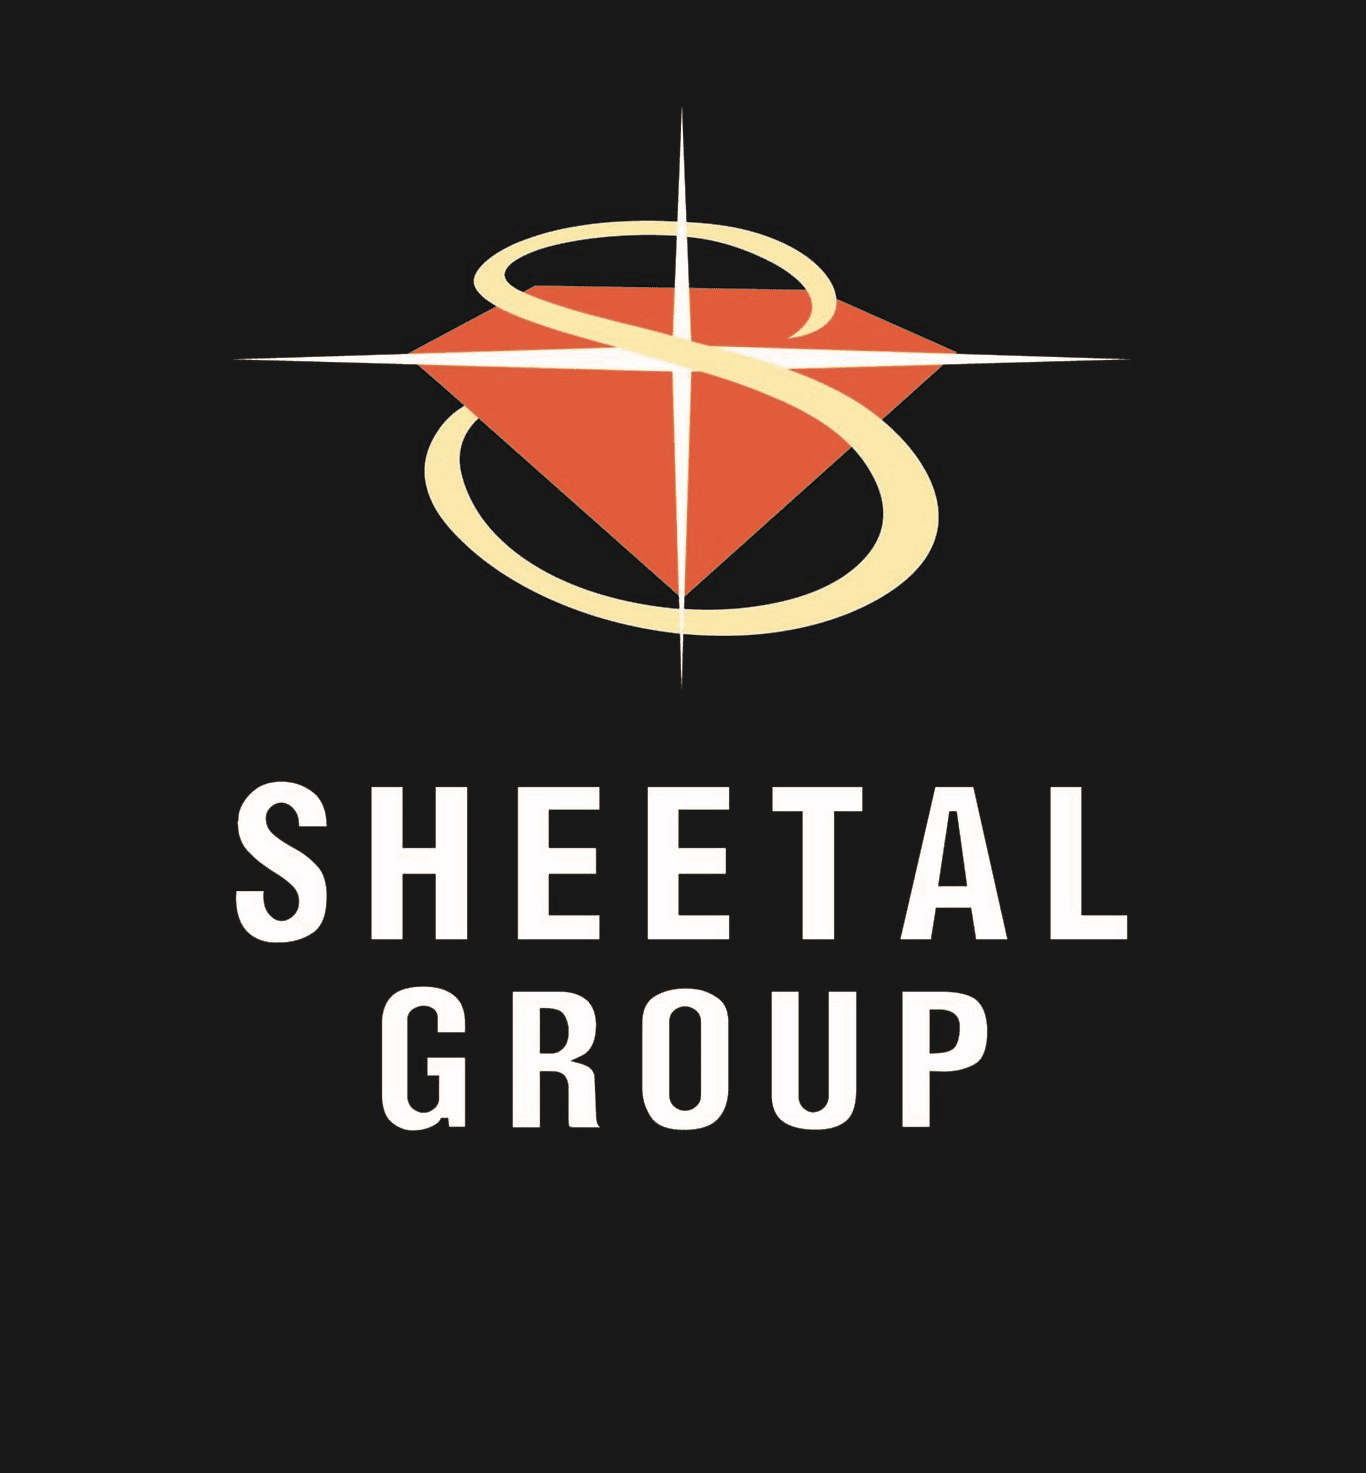 Sheetal group logo